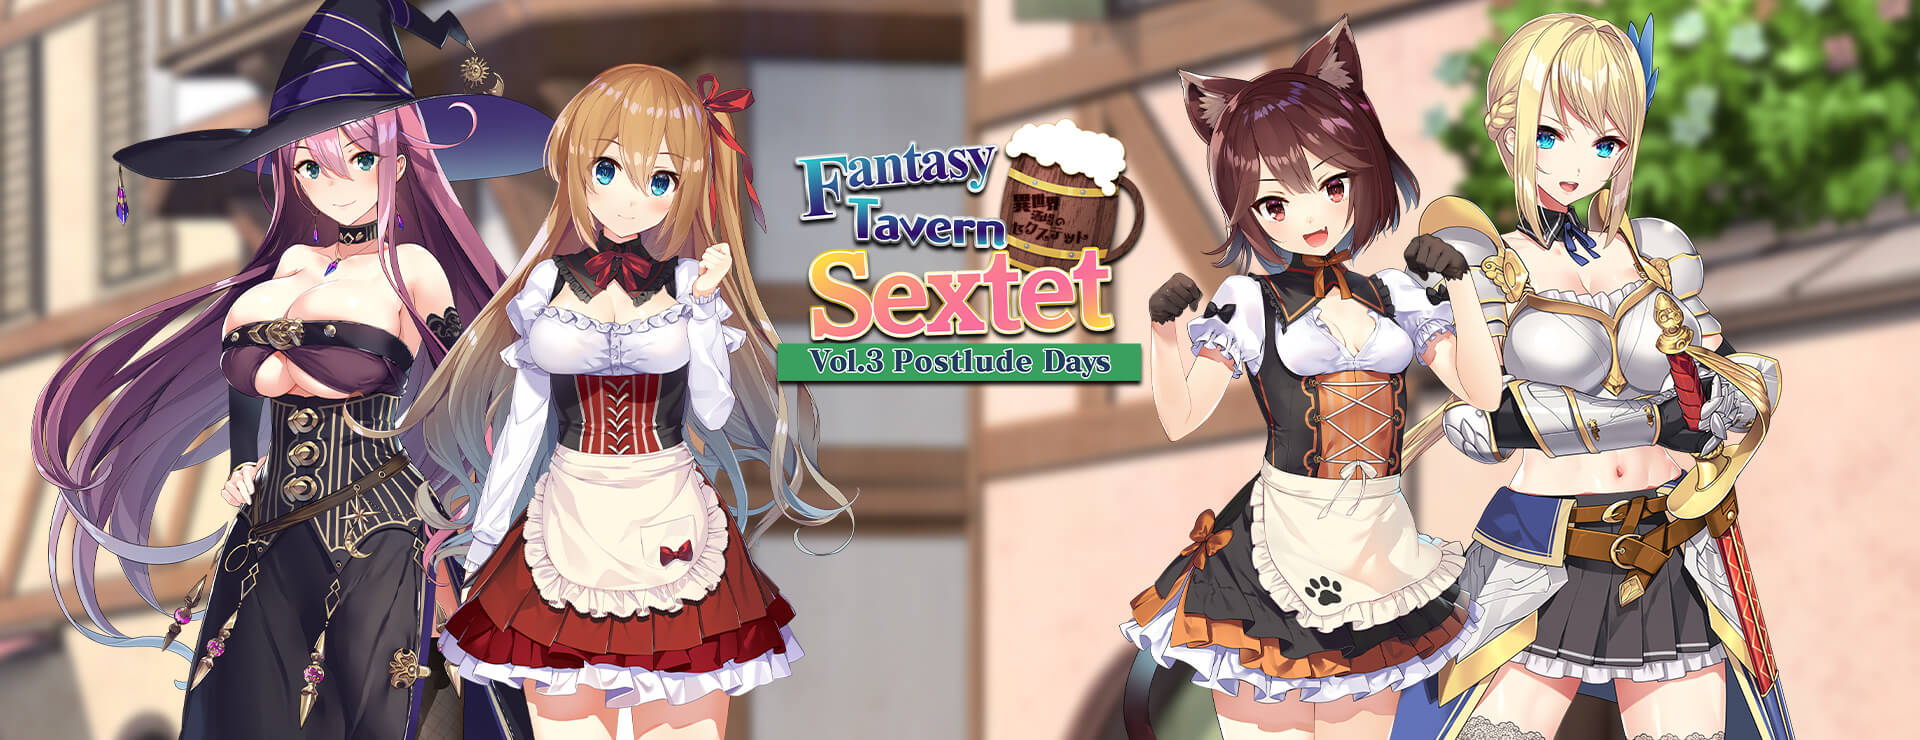 Fantasy Tavern Sextet - Vol.3 Postlude Days - Visual Novel Game